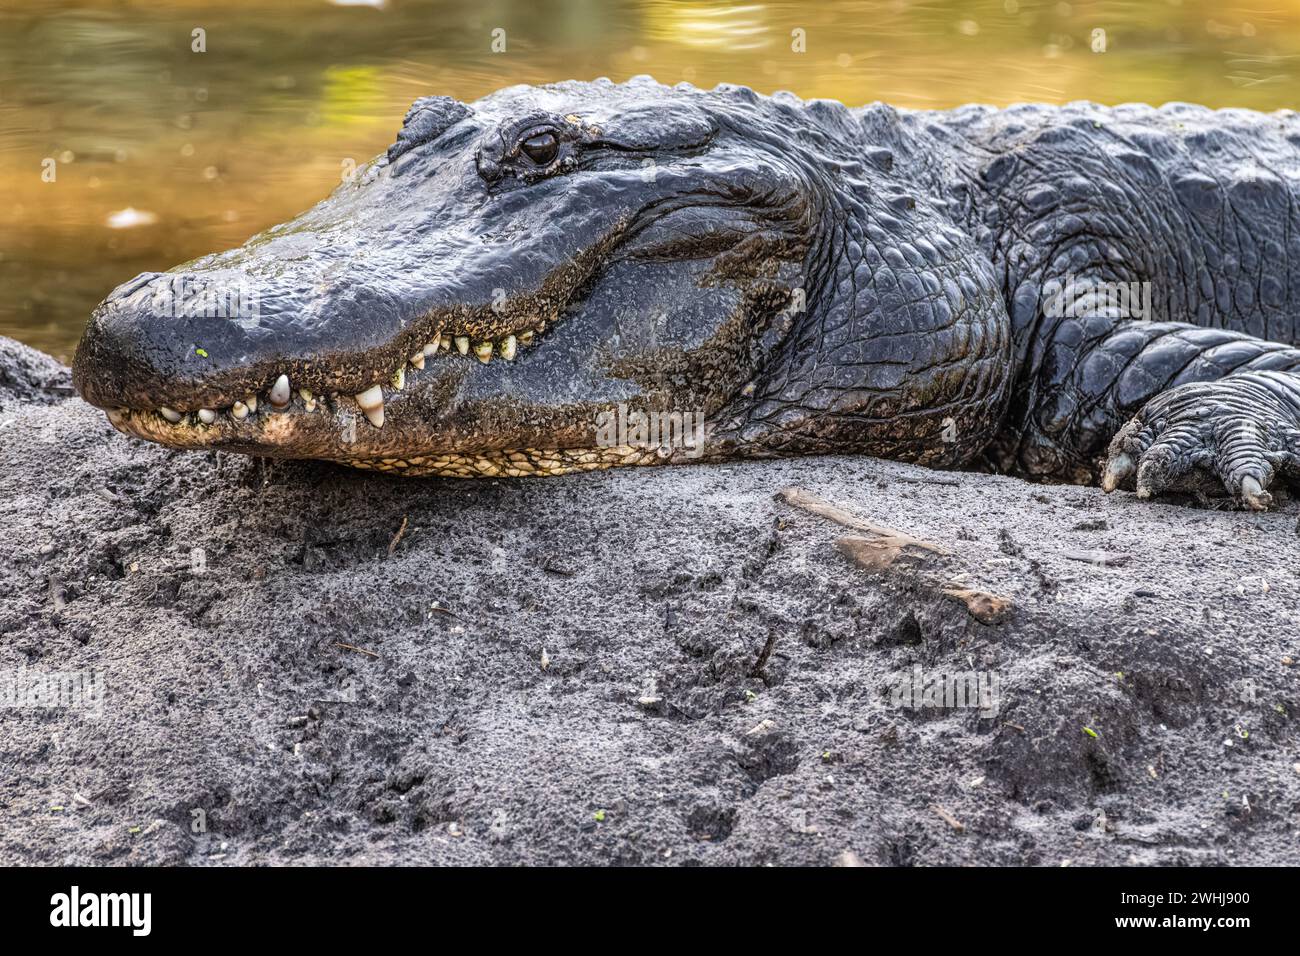 American alligator (Alligator mississippiensis) resting on the bank of a pond at St. Augustine Alligator Farm on Anastasia Island in St. Augustine, FL. Stock Photo